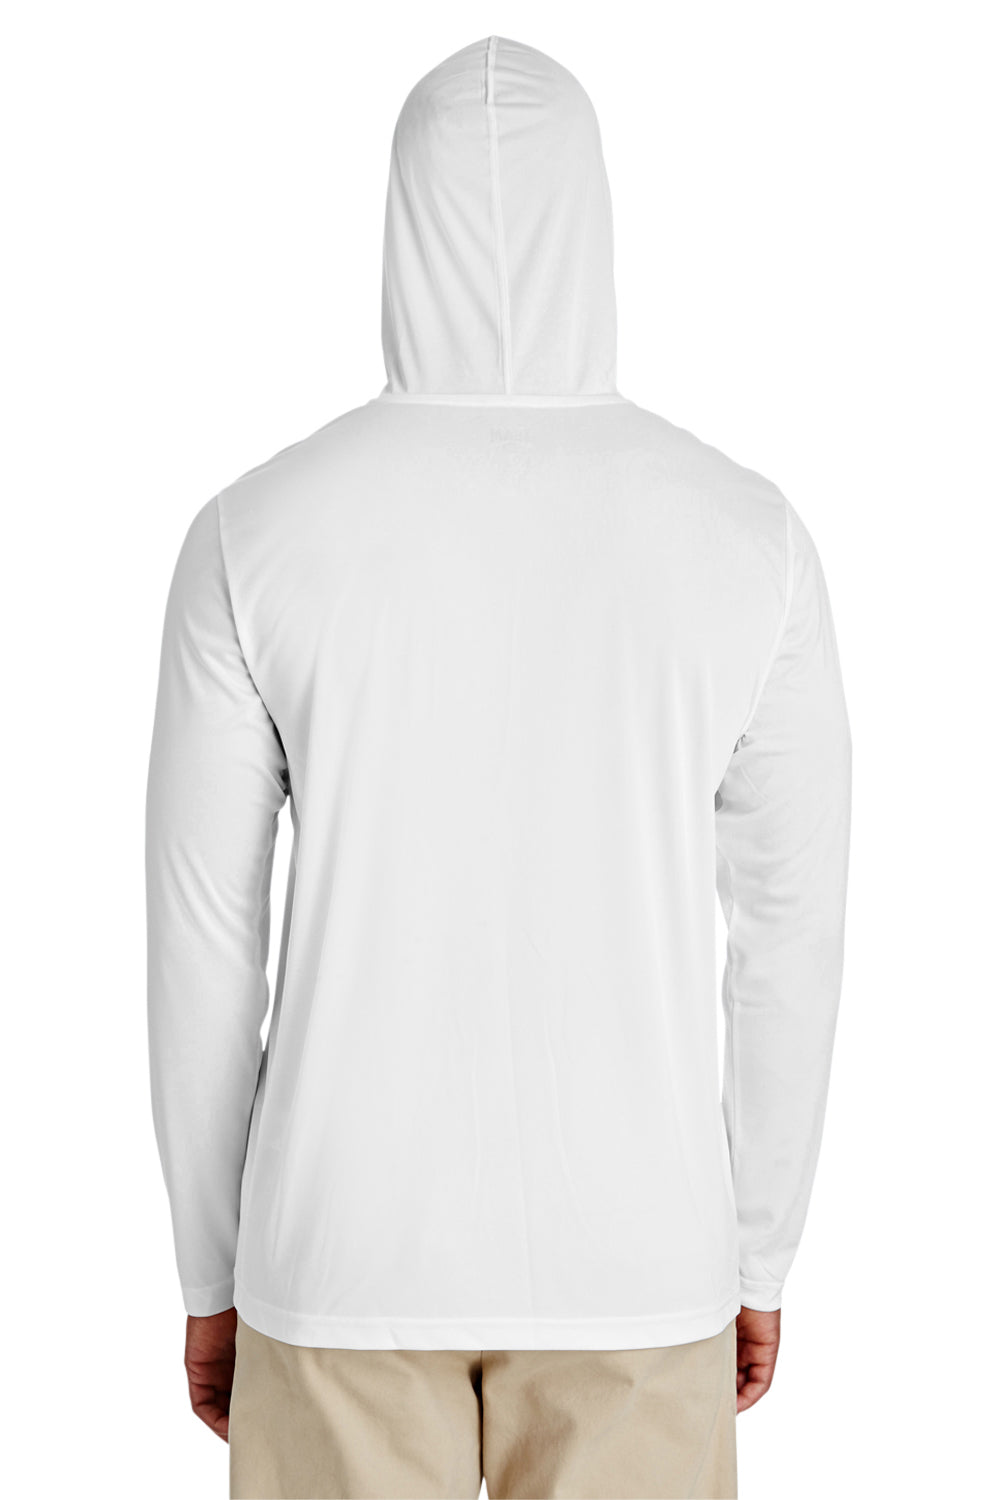 Team 365 TT41 Mens Zone Performance Moisture Wicking Long Sleeve Hooded T-Shirt Hoodie White Back